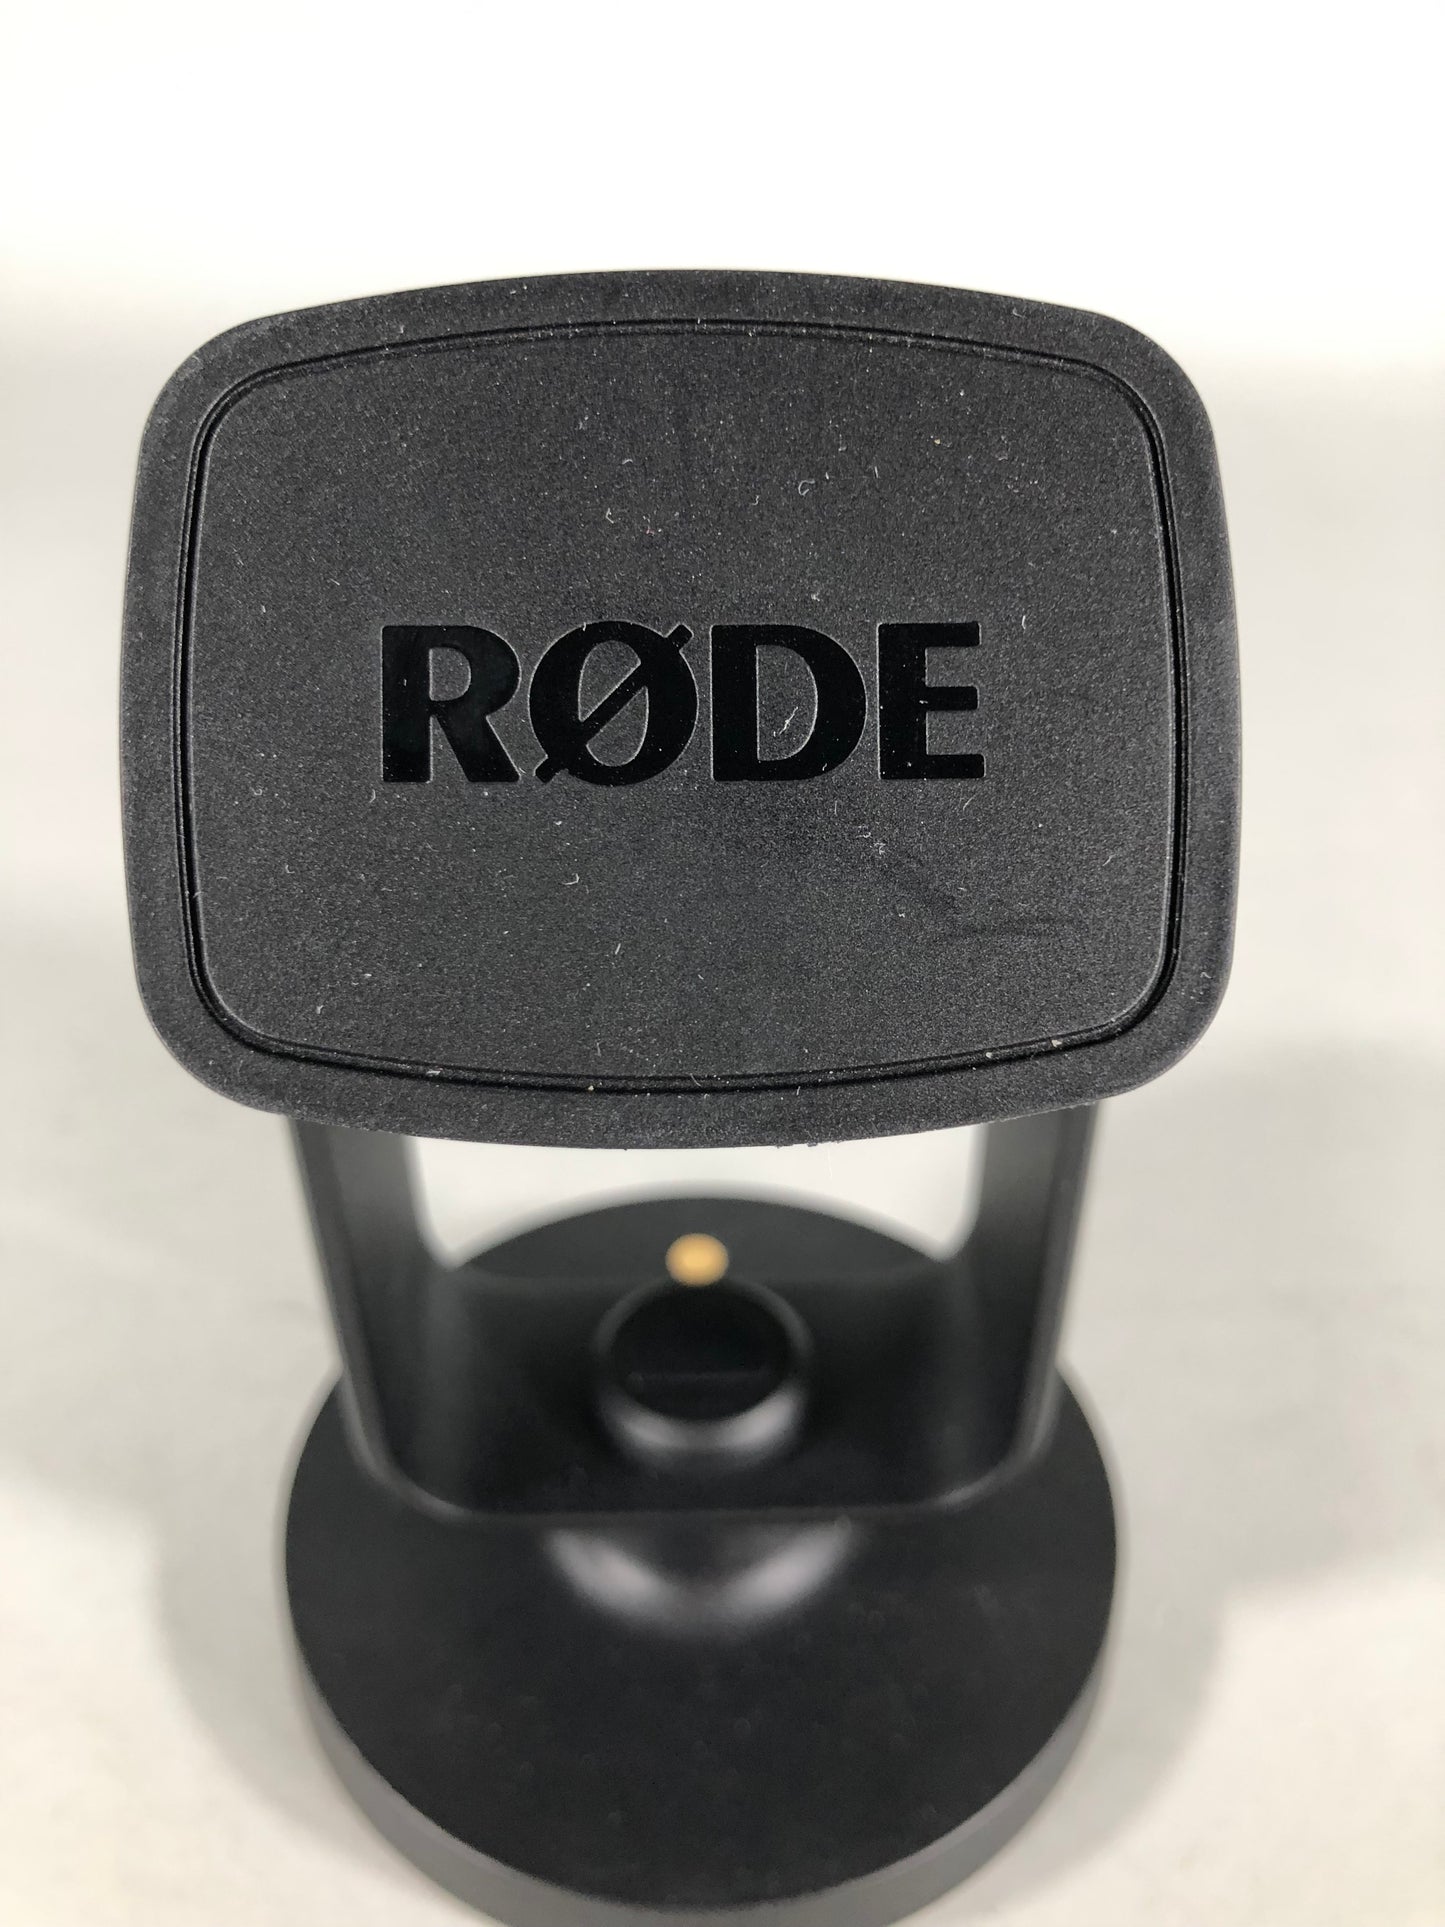 RODE NT-USB mini USB Microphone